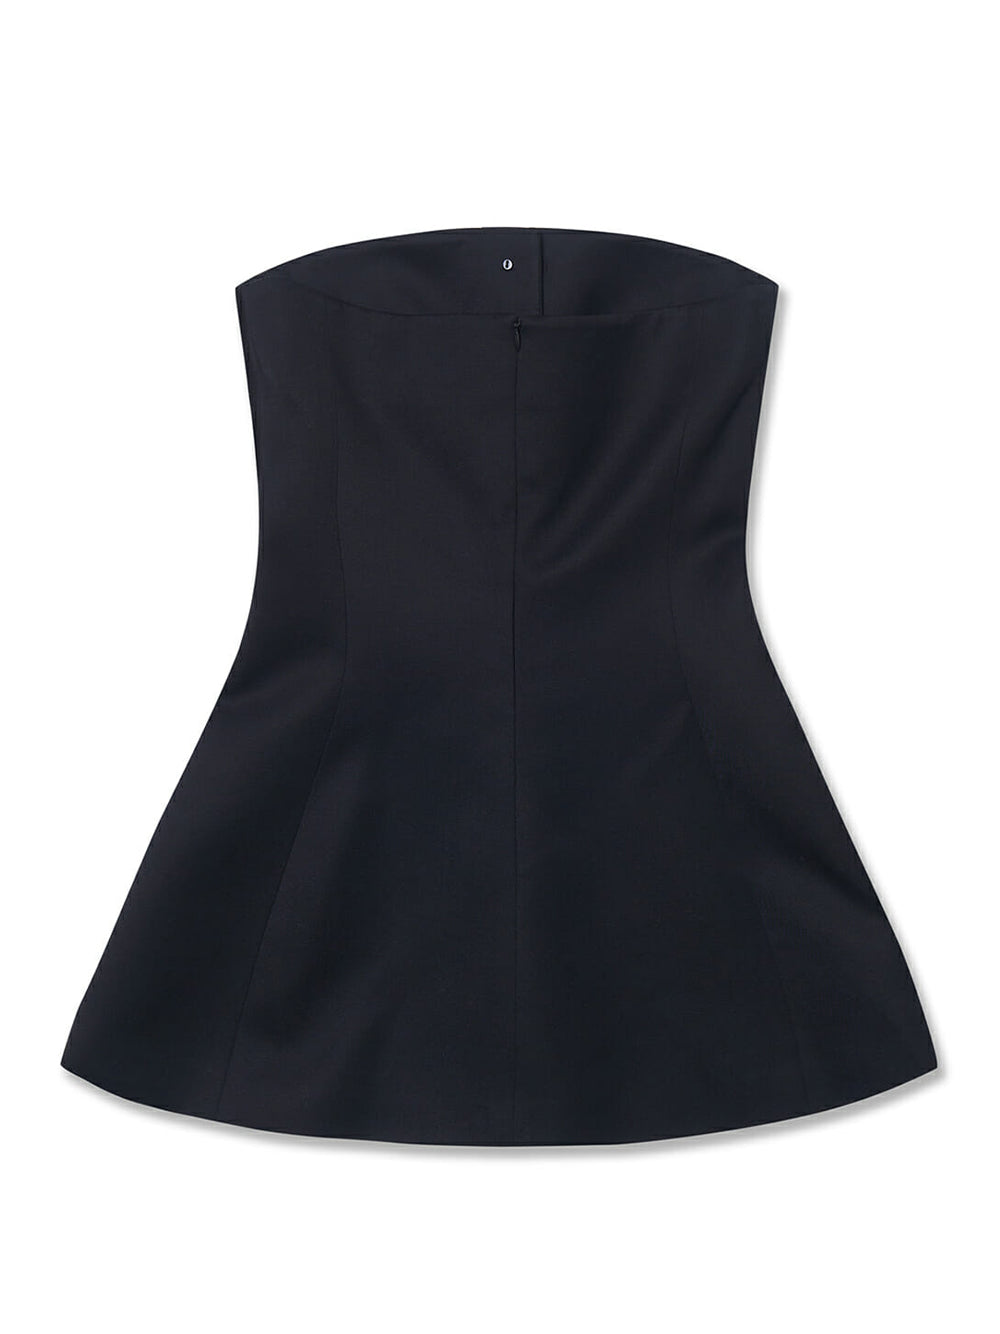 Pearl Buttons Wool-Blend Bustier Mini Dress (Black)